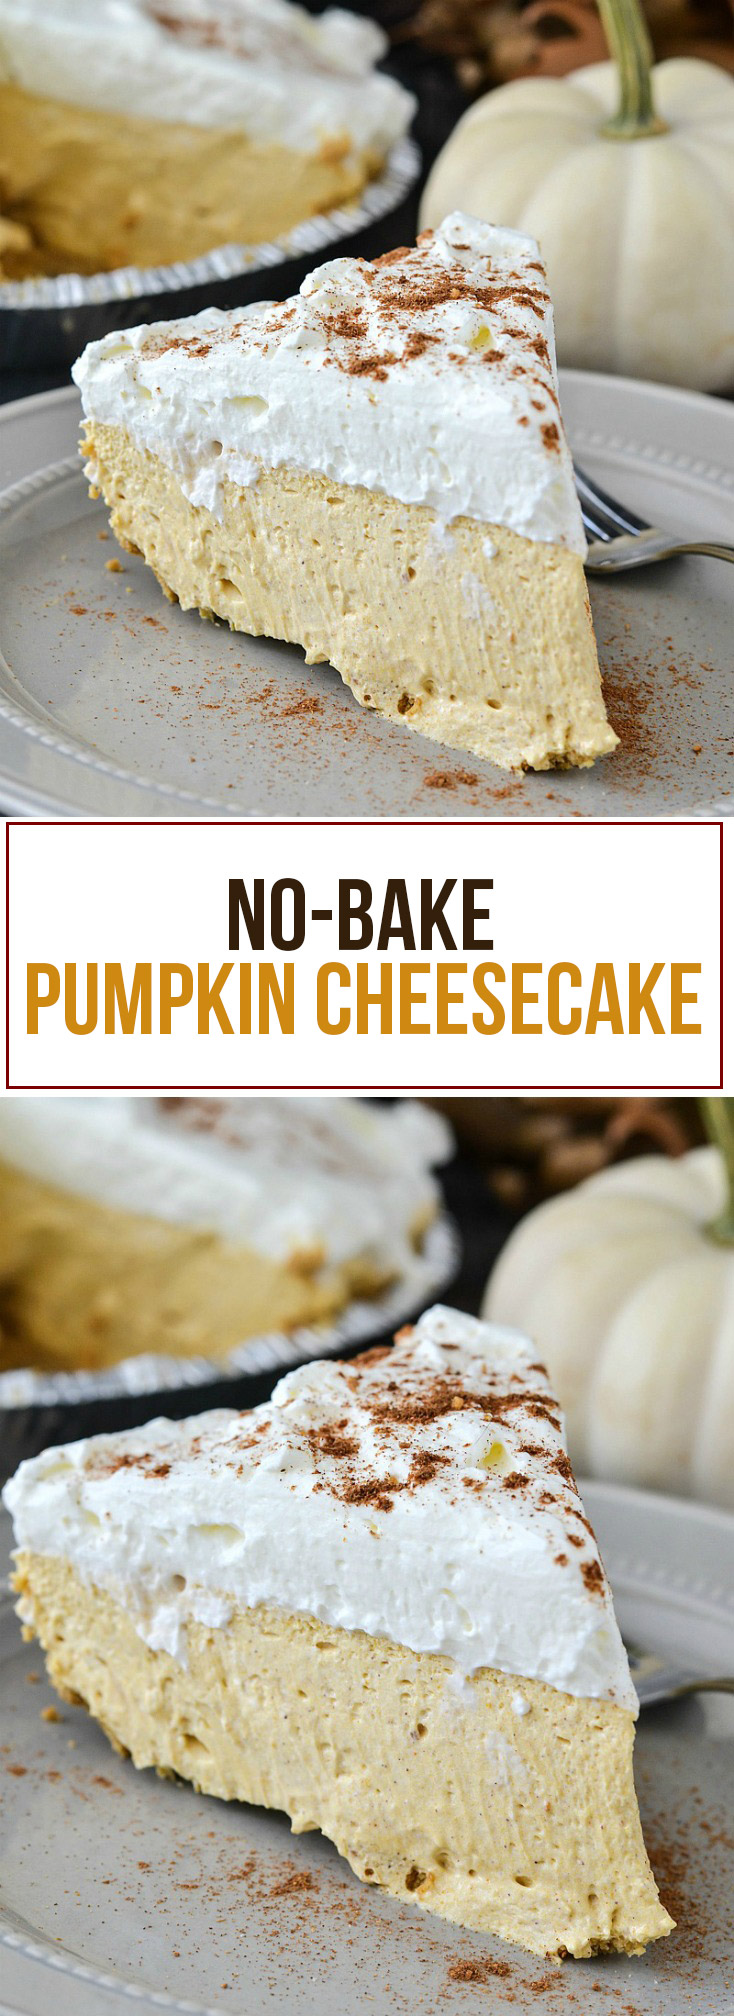 No-Bake Pumpkin Cheesecake - www.motherthyme.com